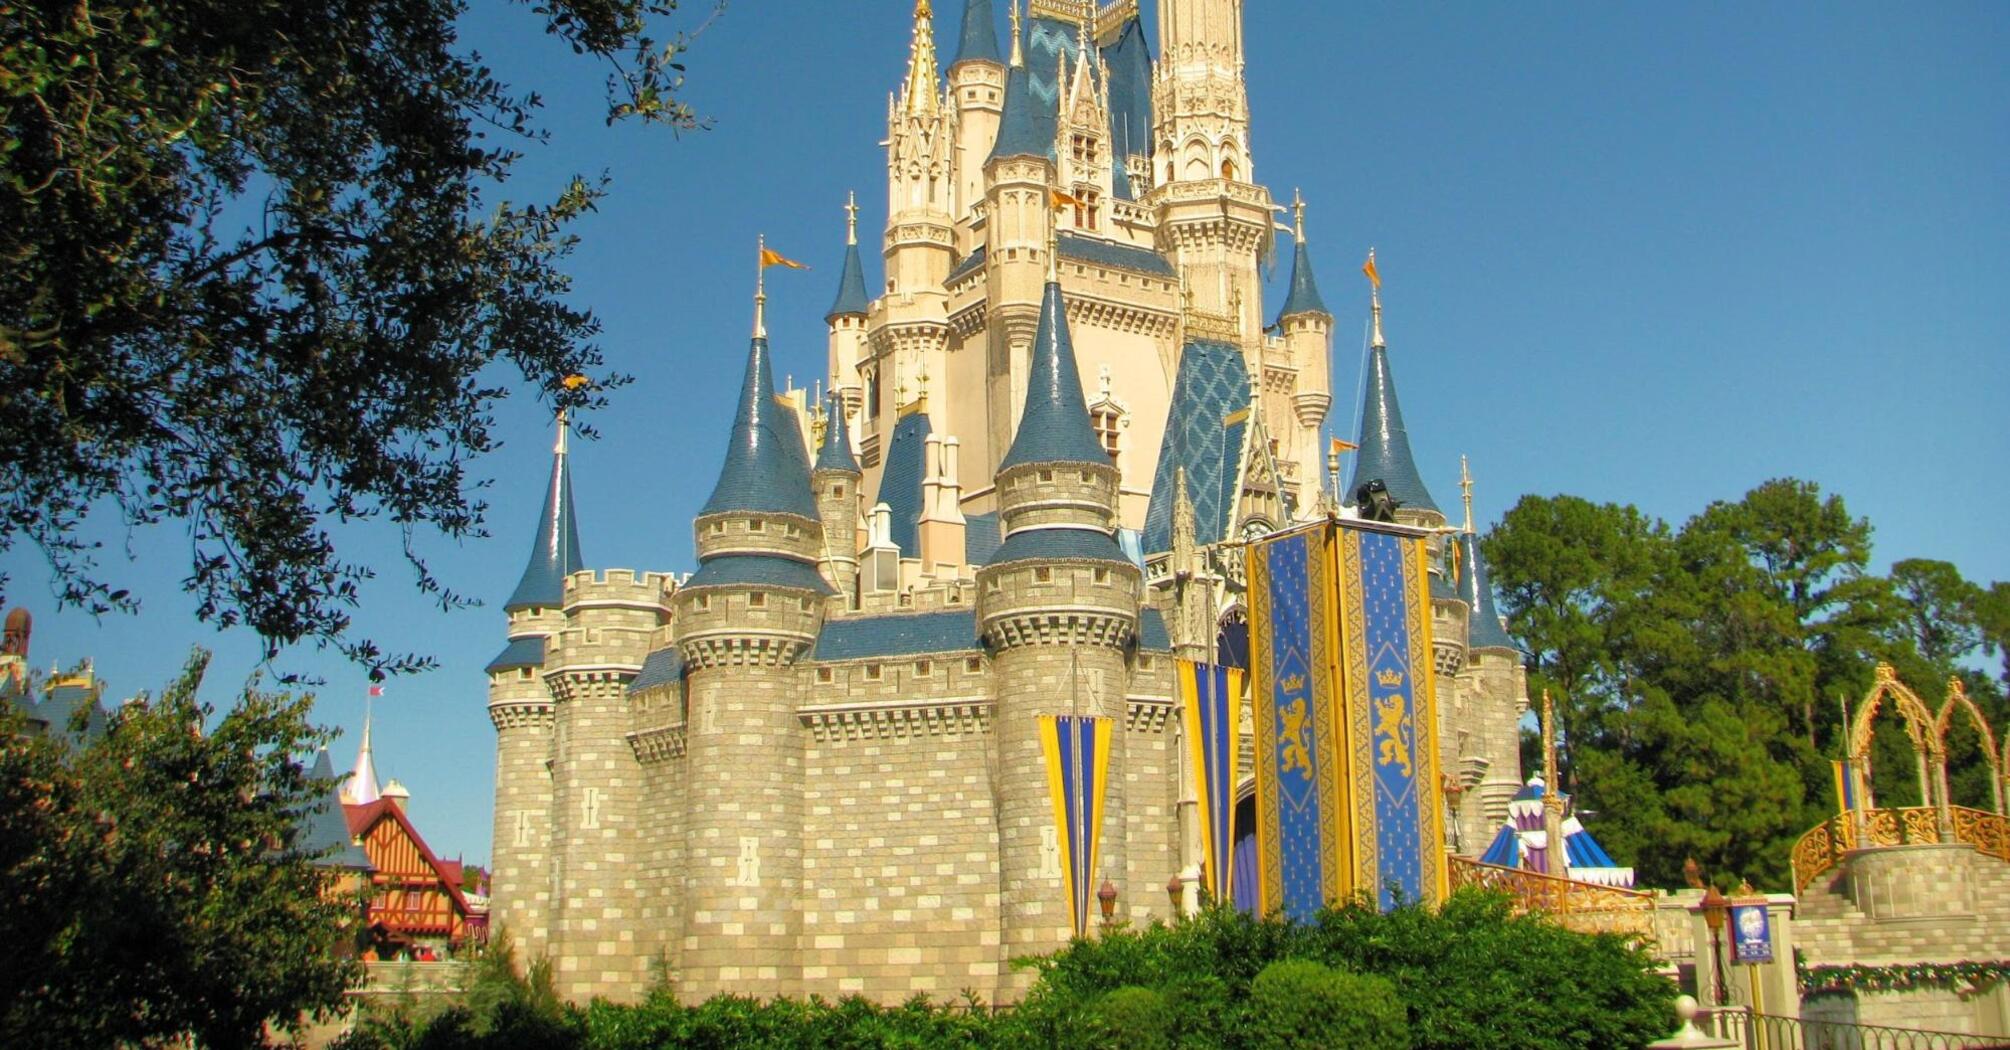 Cinderella Castle at Disneyland, sunny day, trees around